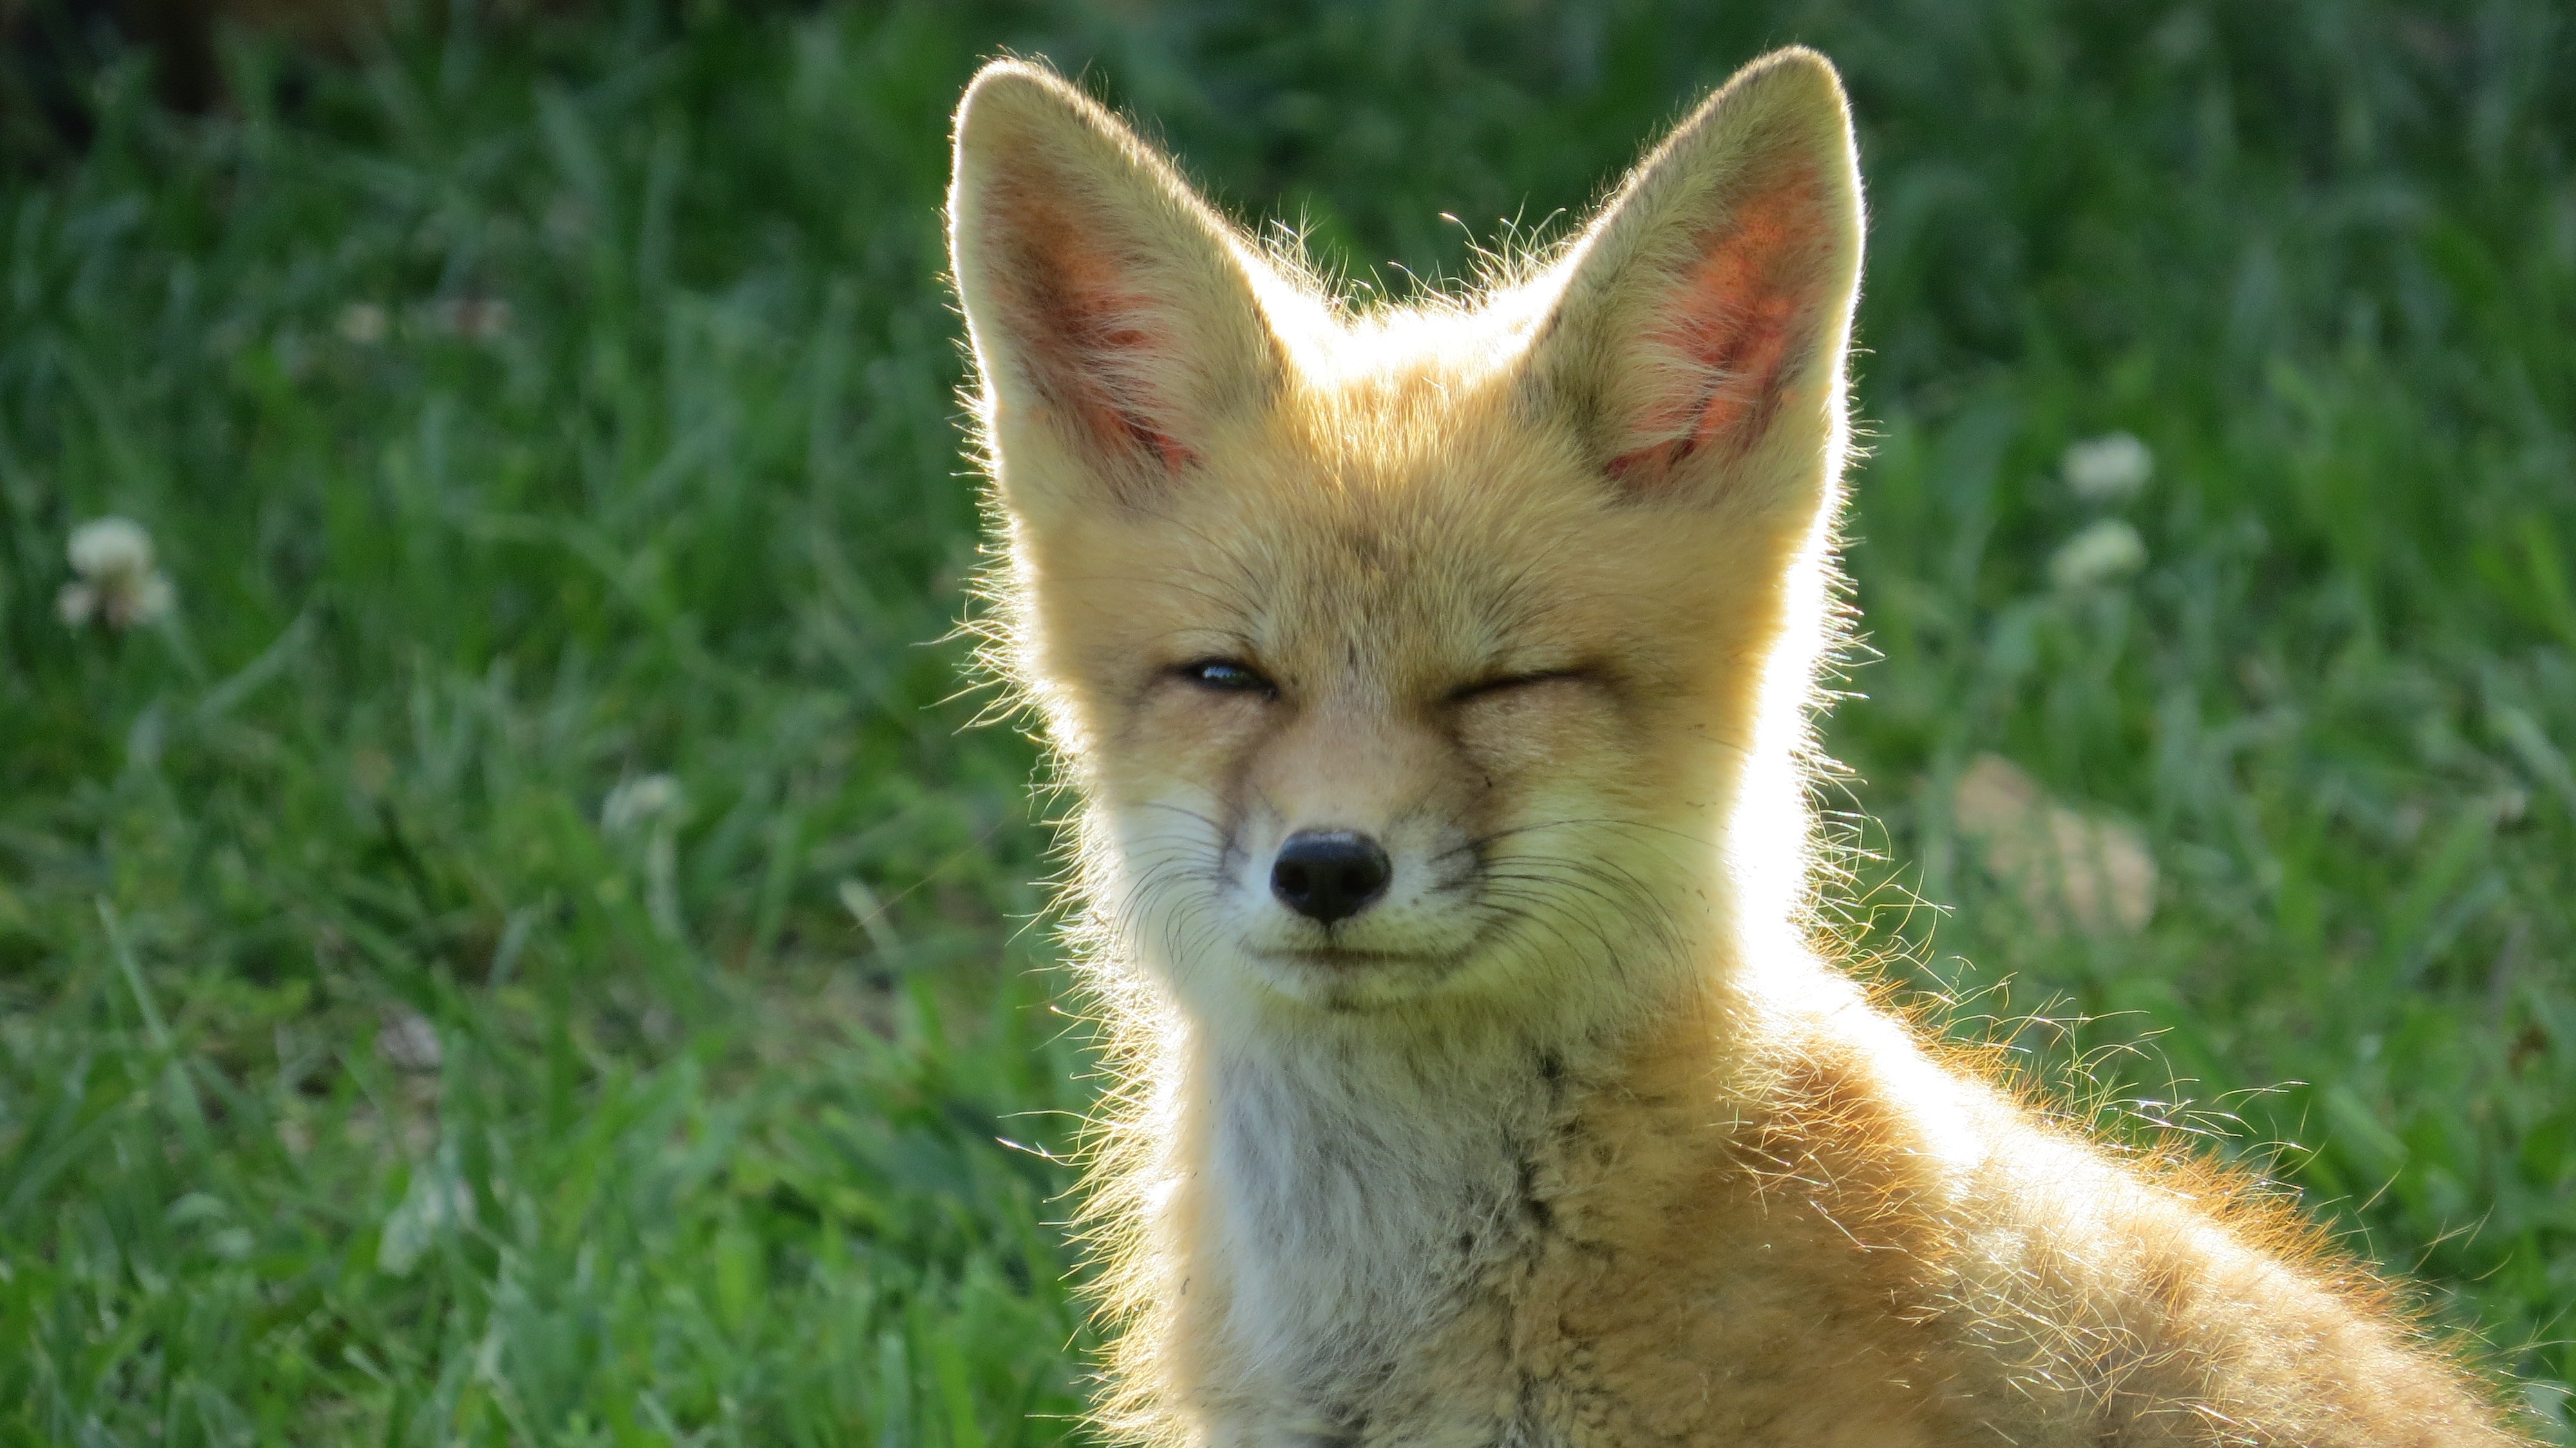 winking_baby_fox.jpg